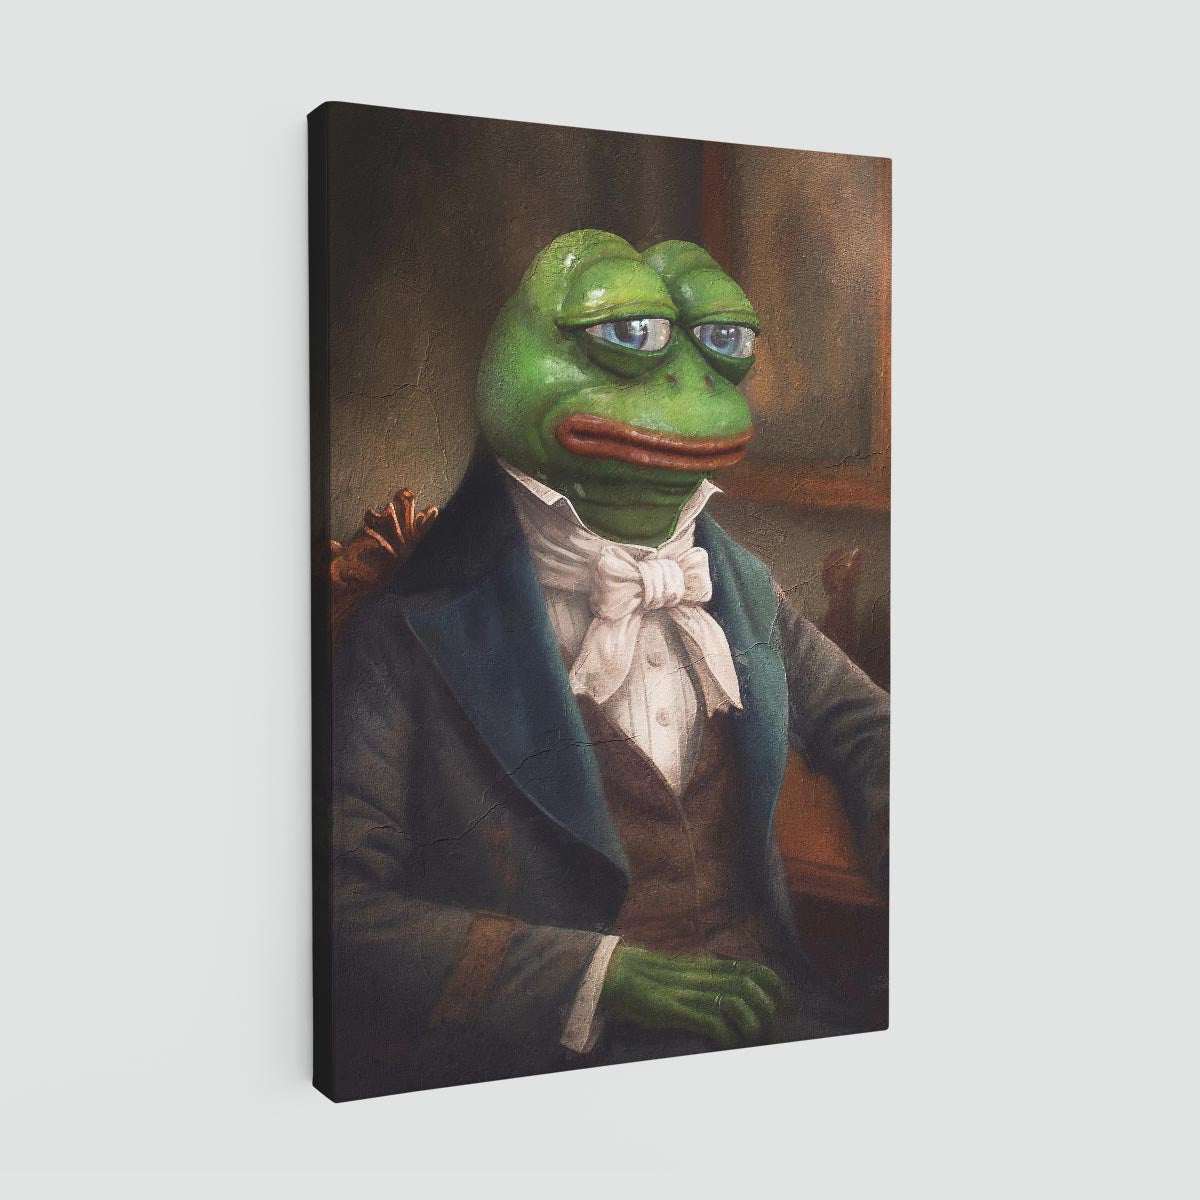 "Sir Pepe" canvas print